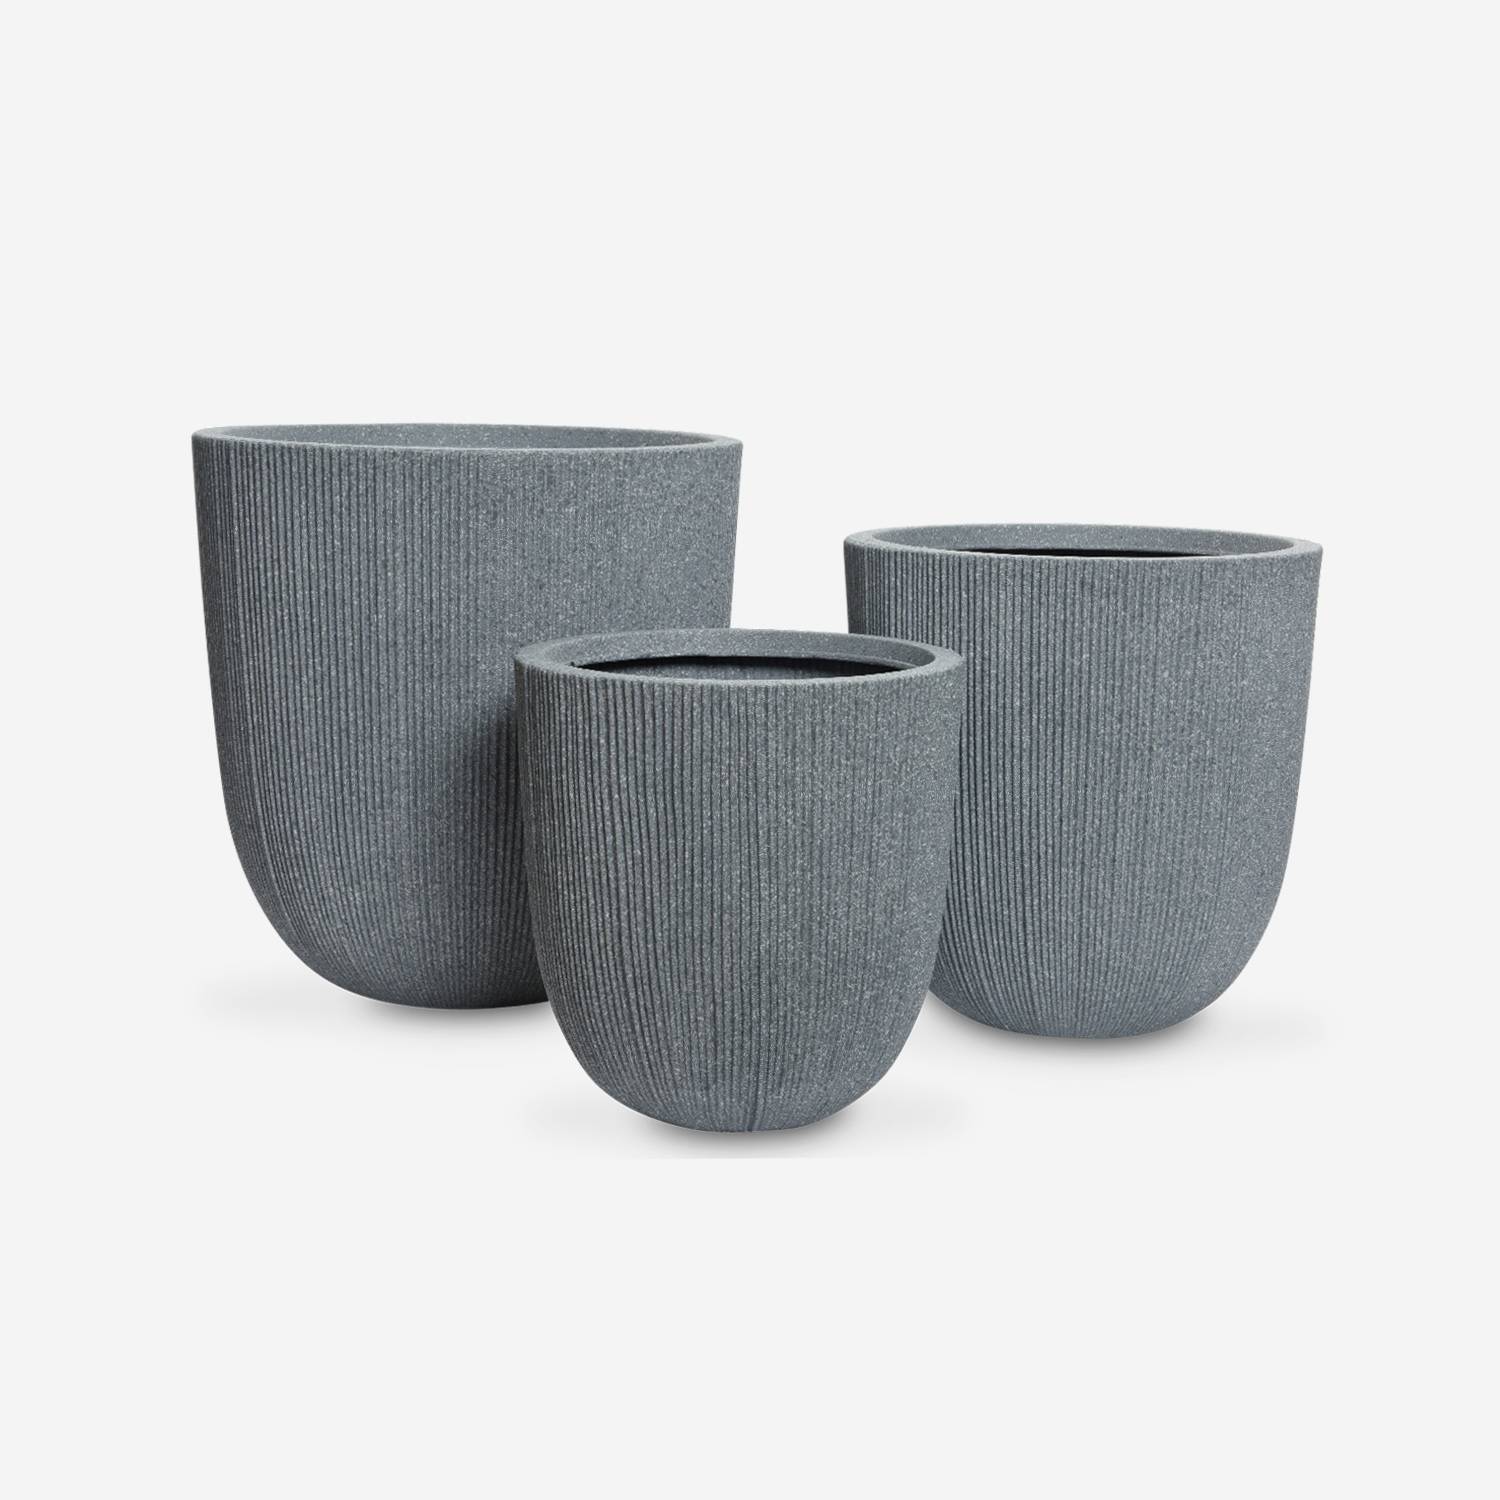 Conjunto de 3 tampas para vasos - Hibiscus - vasos de plástico, 3 tamanhos, redondos, cinzento escuro, encaixáveis Photo4